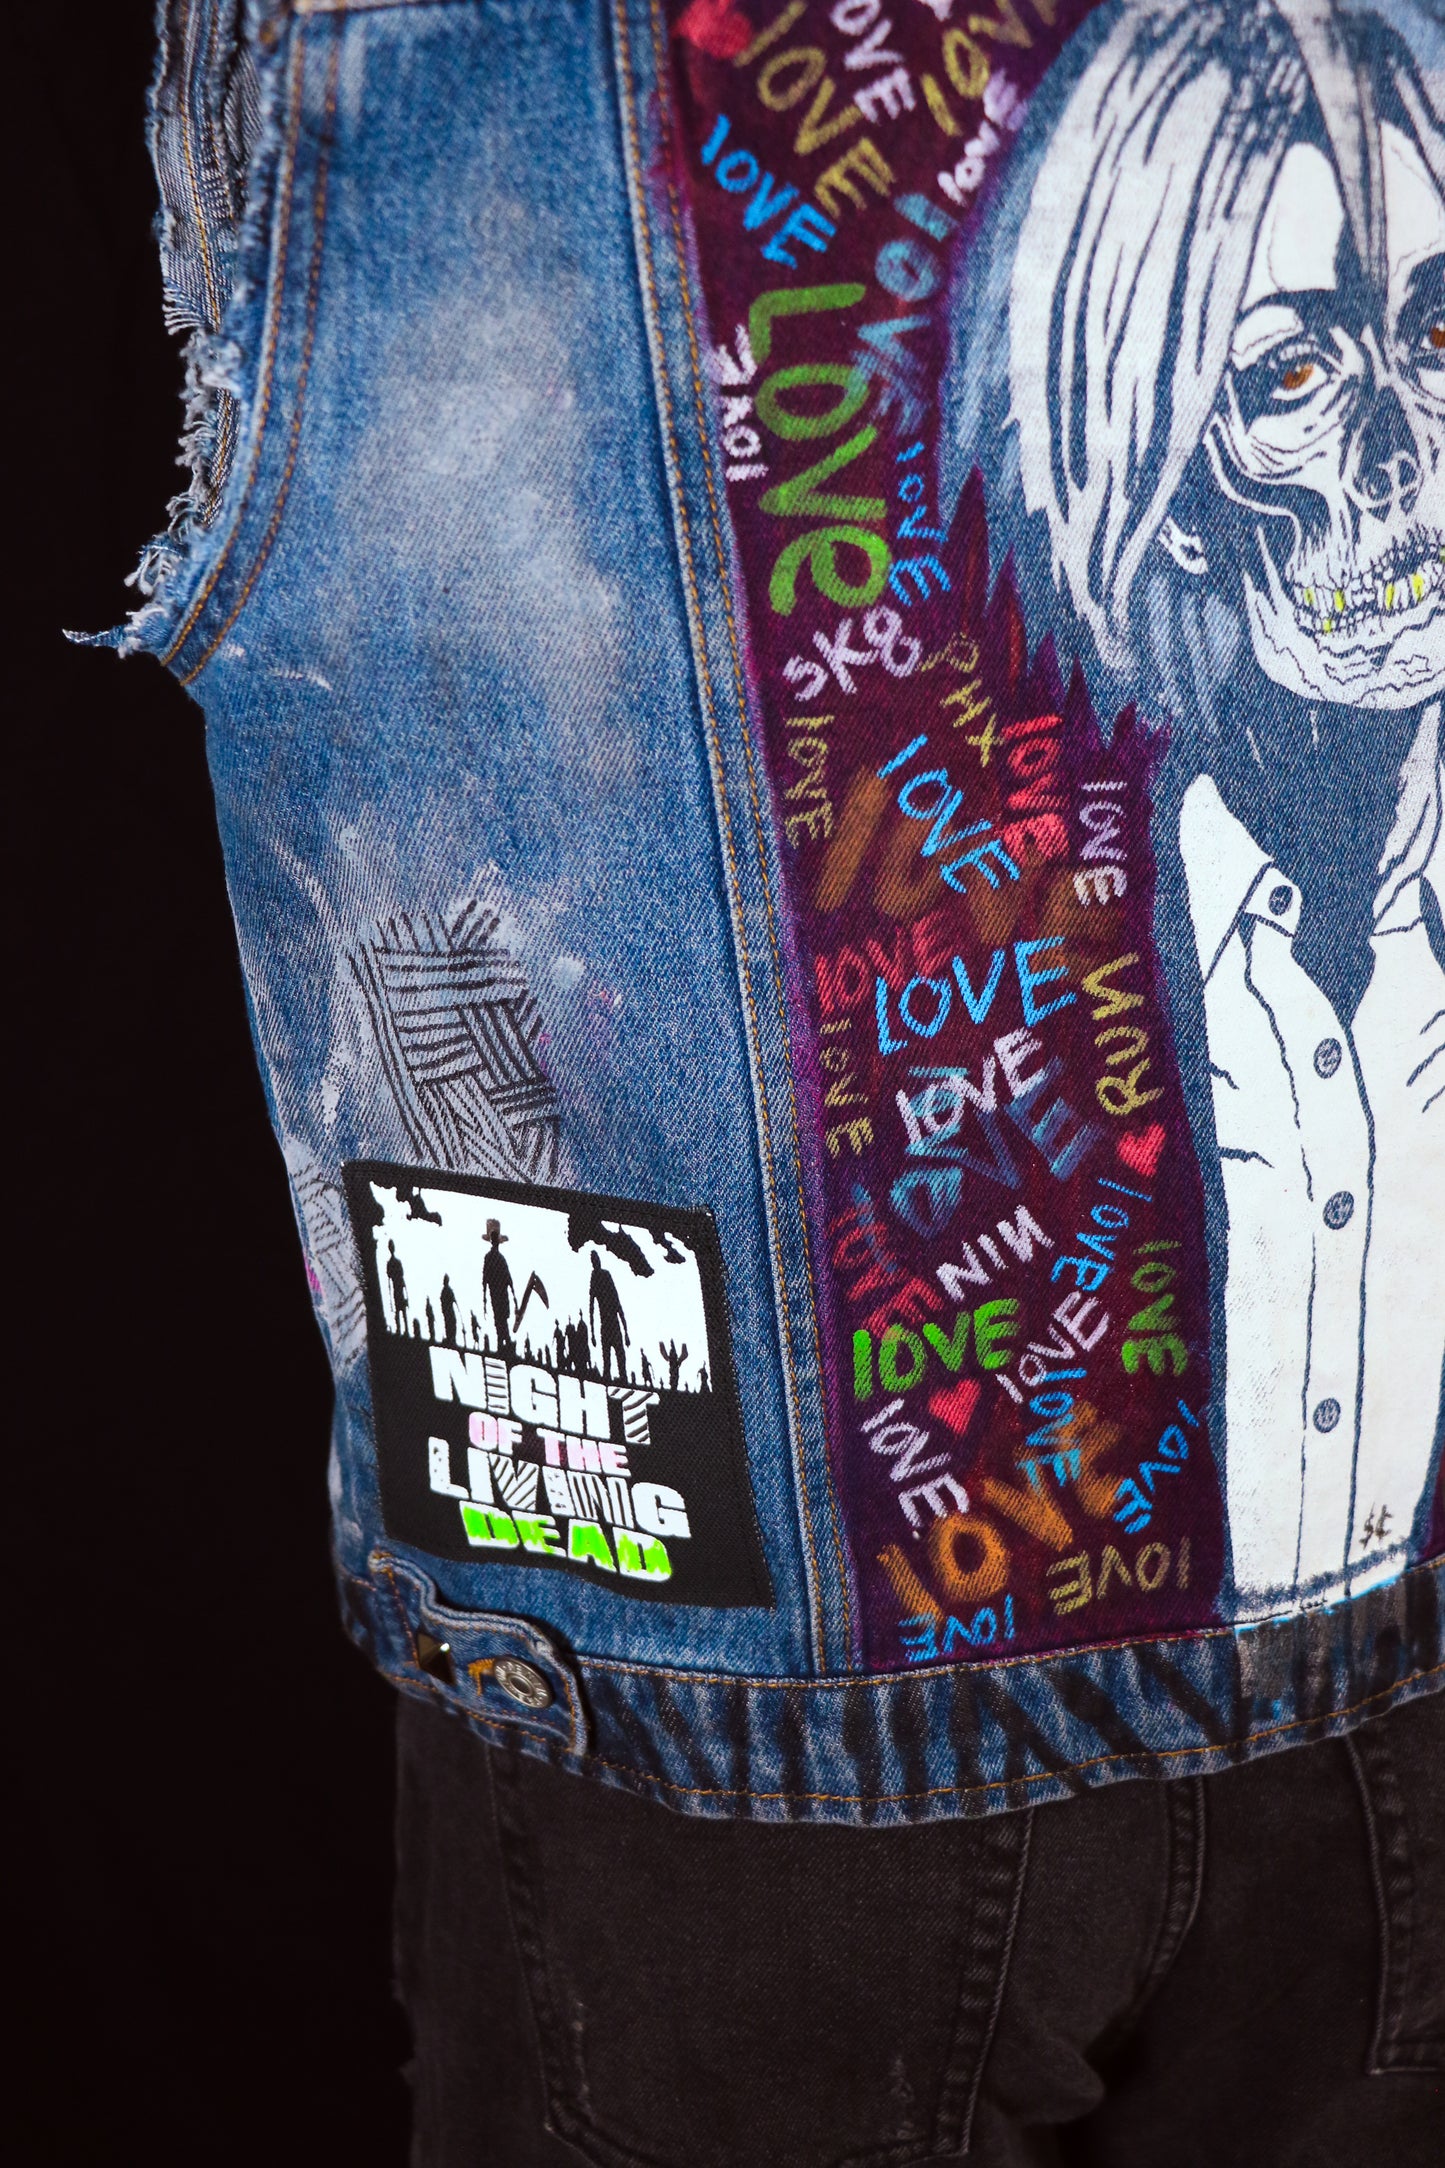 Punk Rock Vest- Roll with it